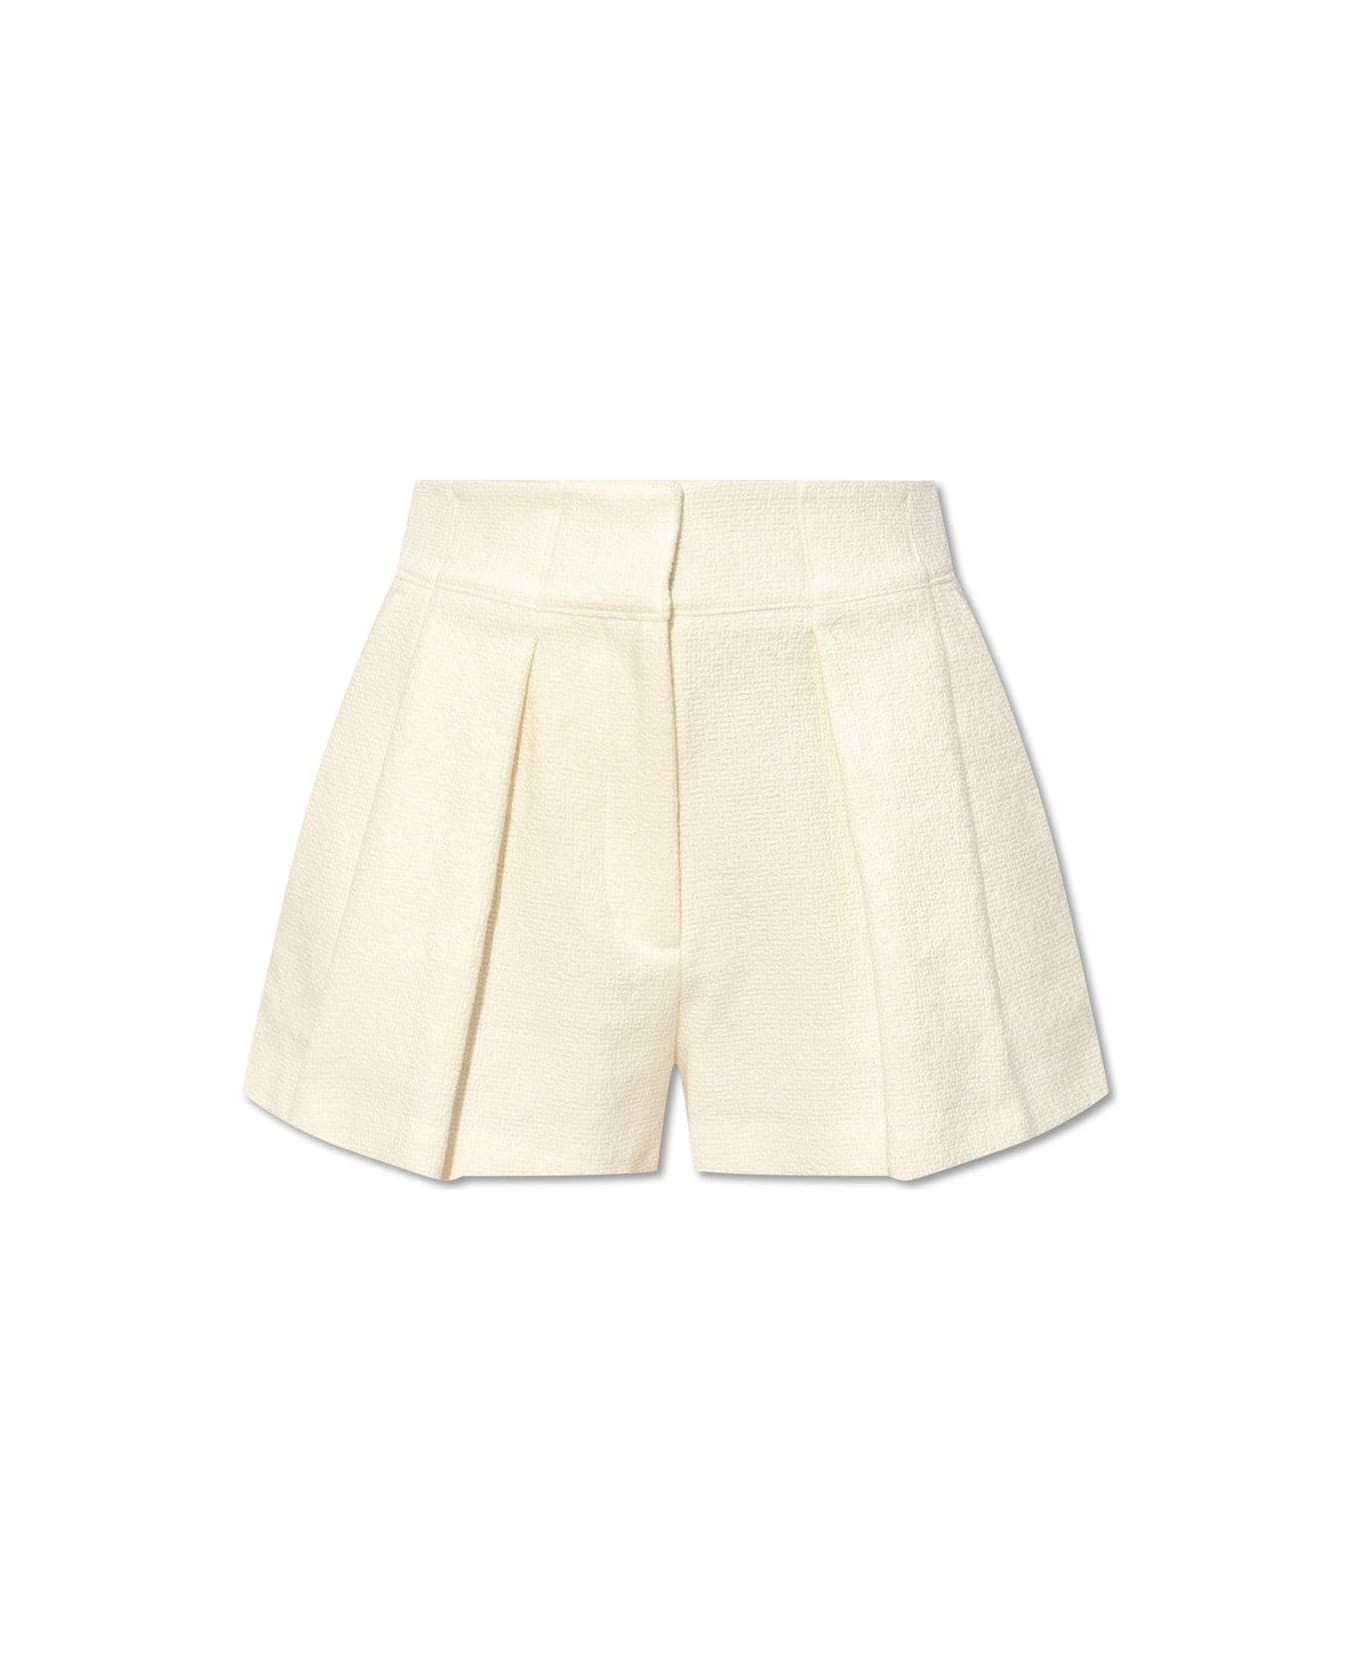 Emporio Armani Cotton Shorts - White